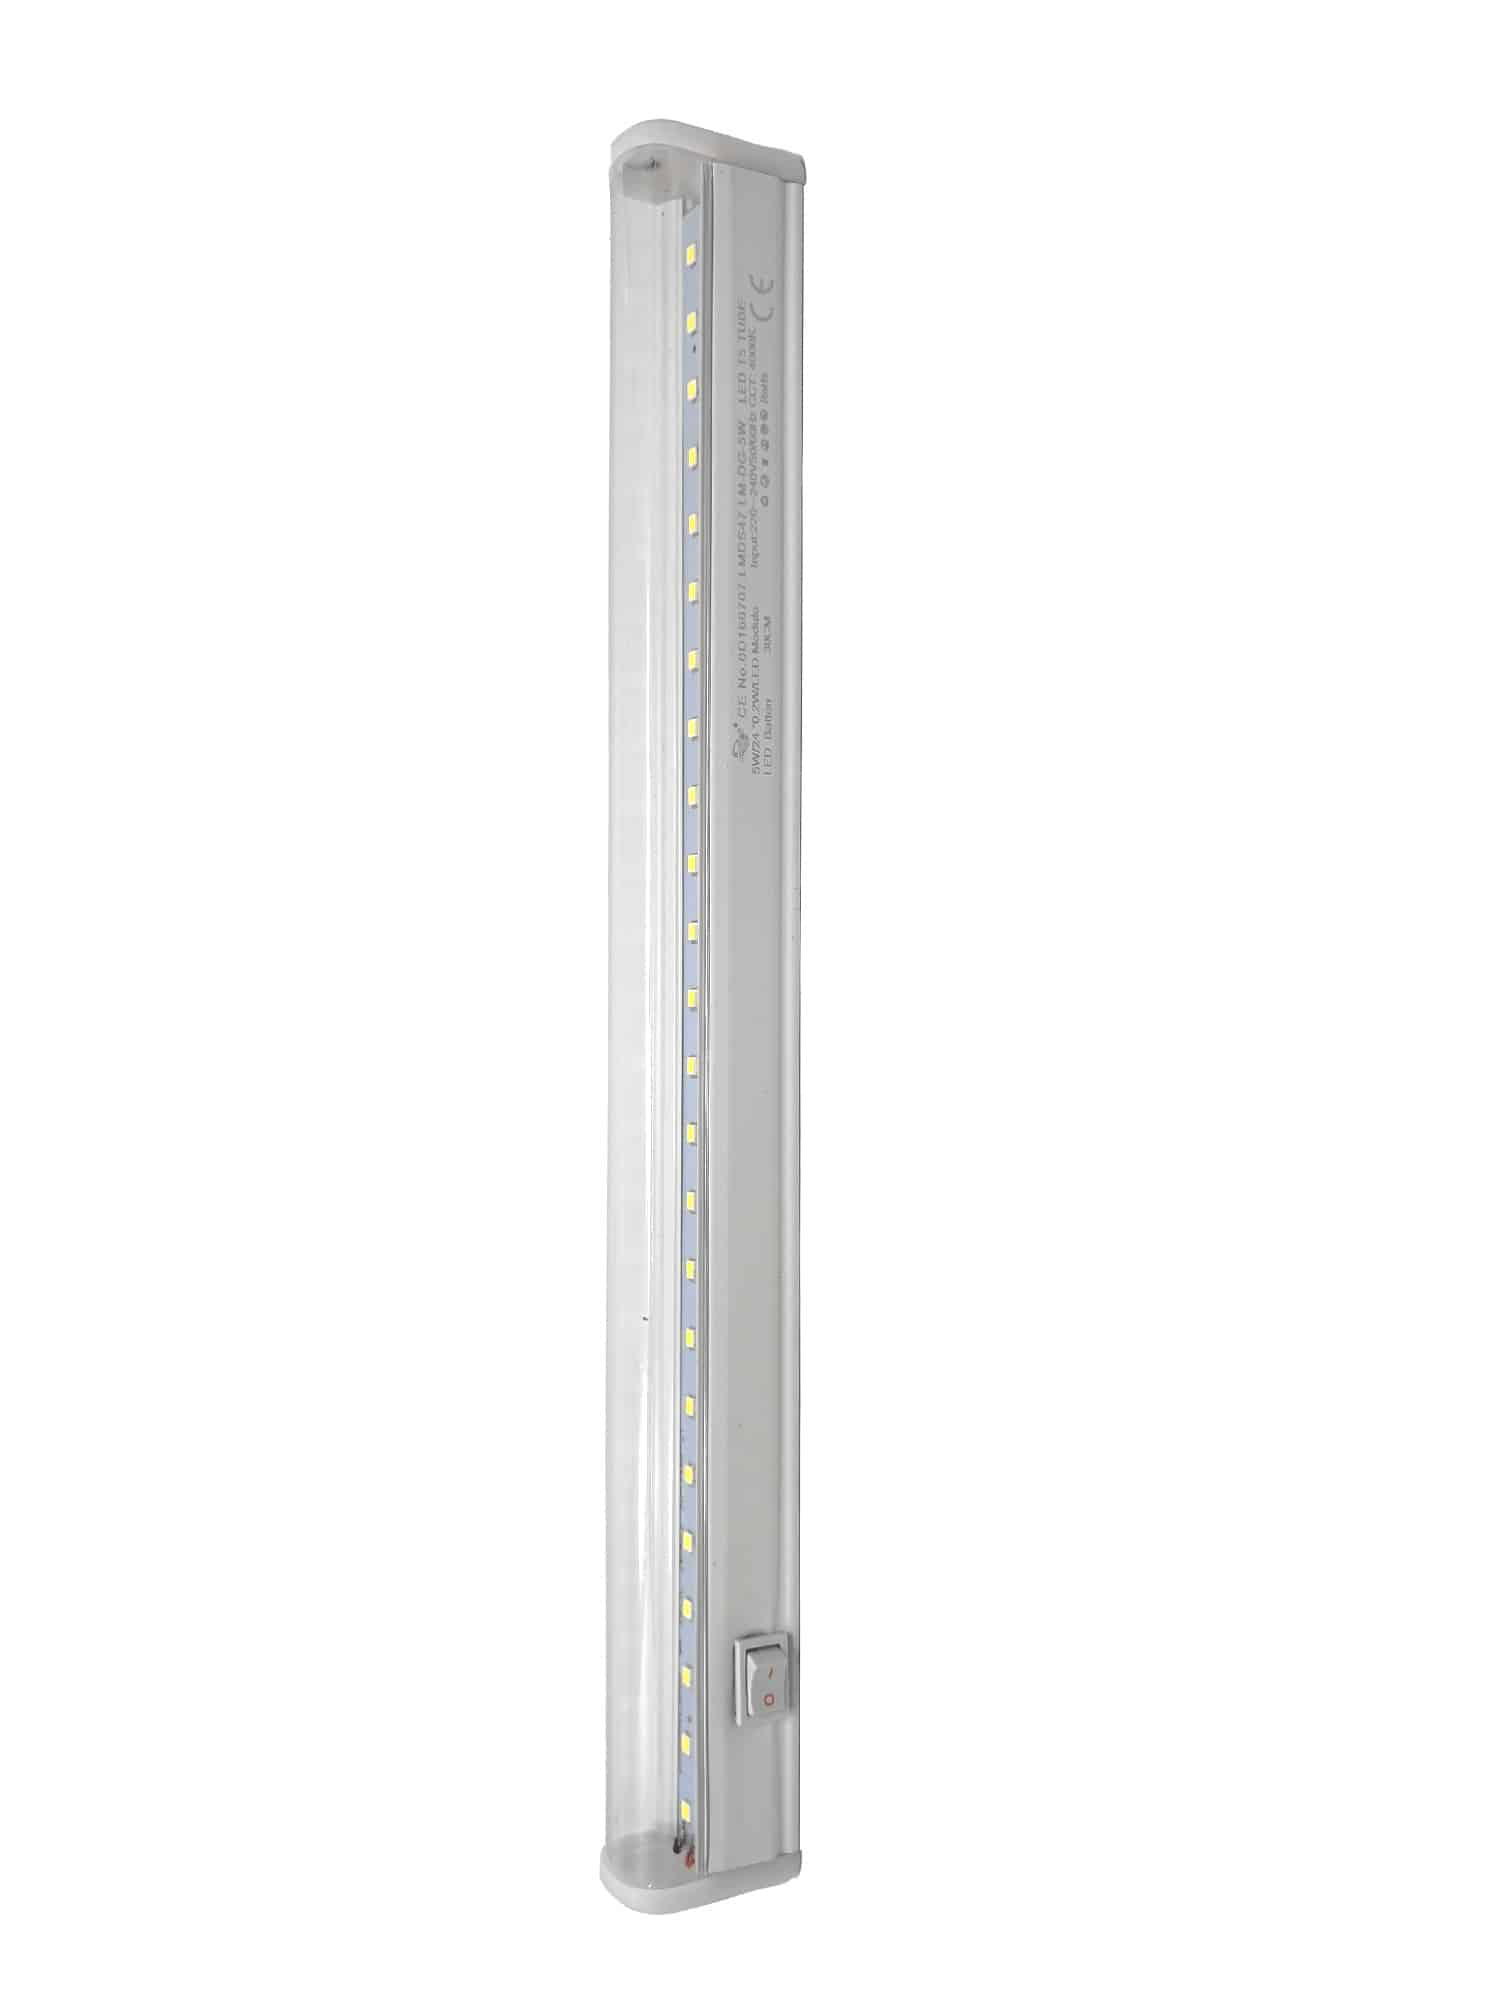 P1-T5-LED-20W - Reglette led T5 - - Reglette 20w 120cm sottopensile T5  MINIMO ORDINE 3PZ